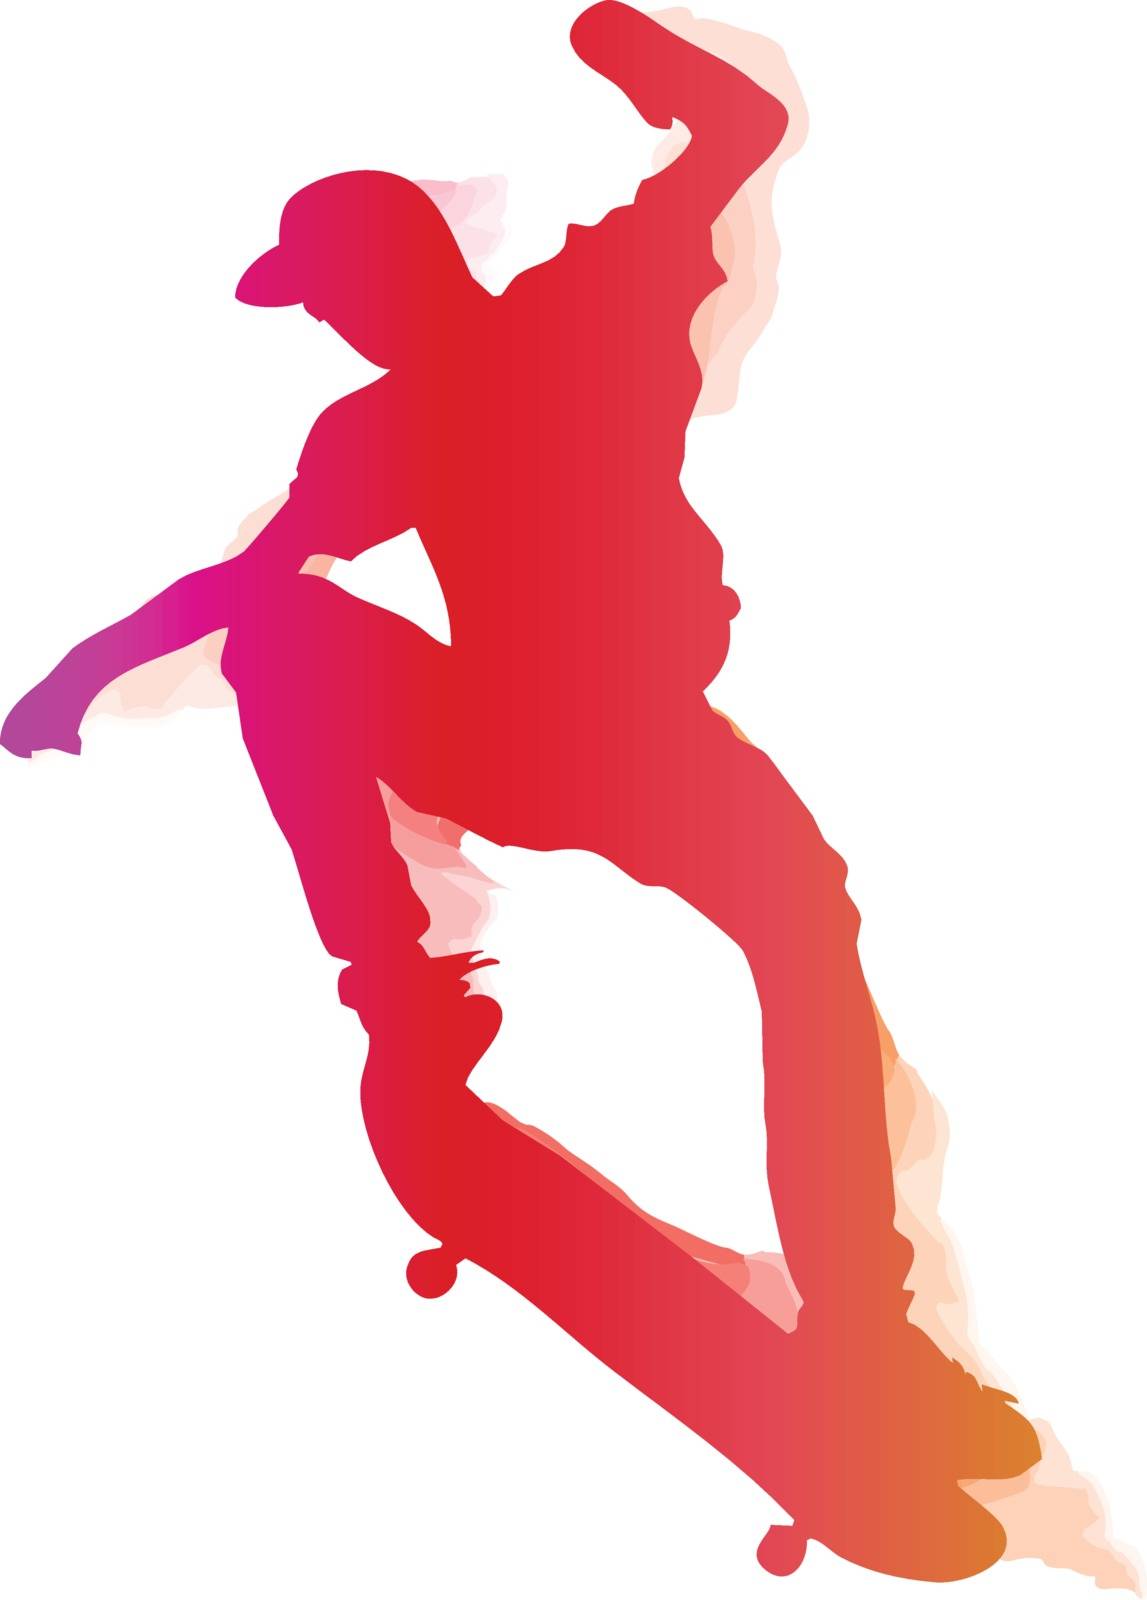 Skaterboarder performing a trick. Vector illustration.